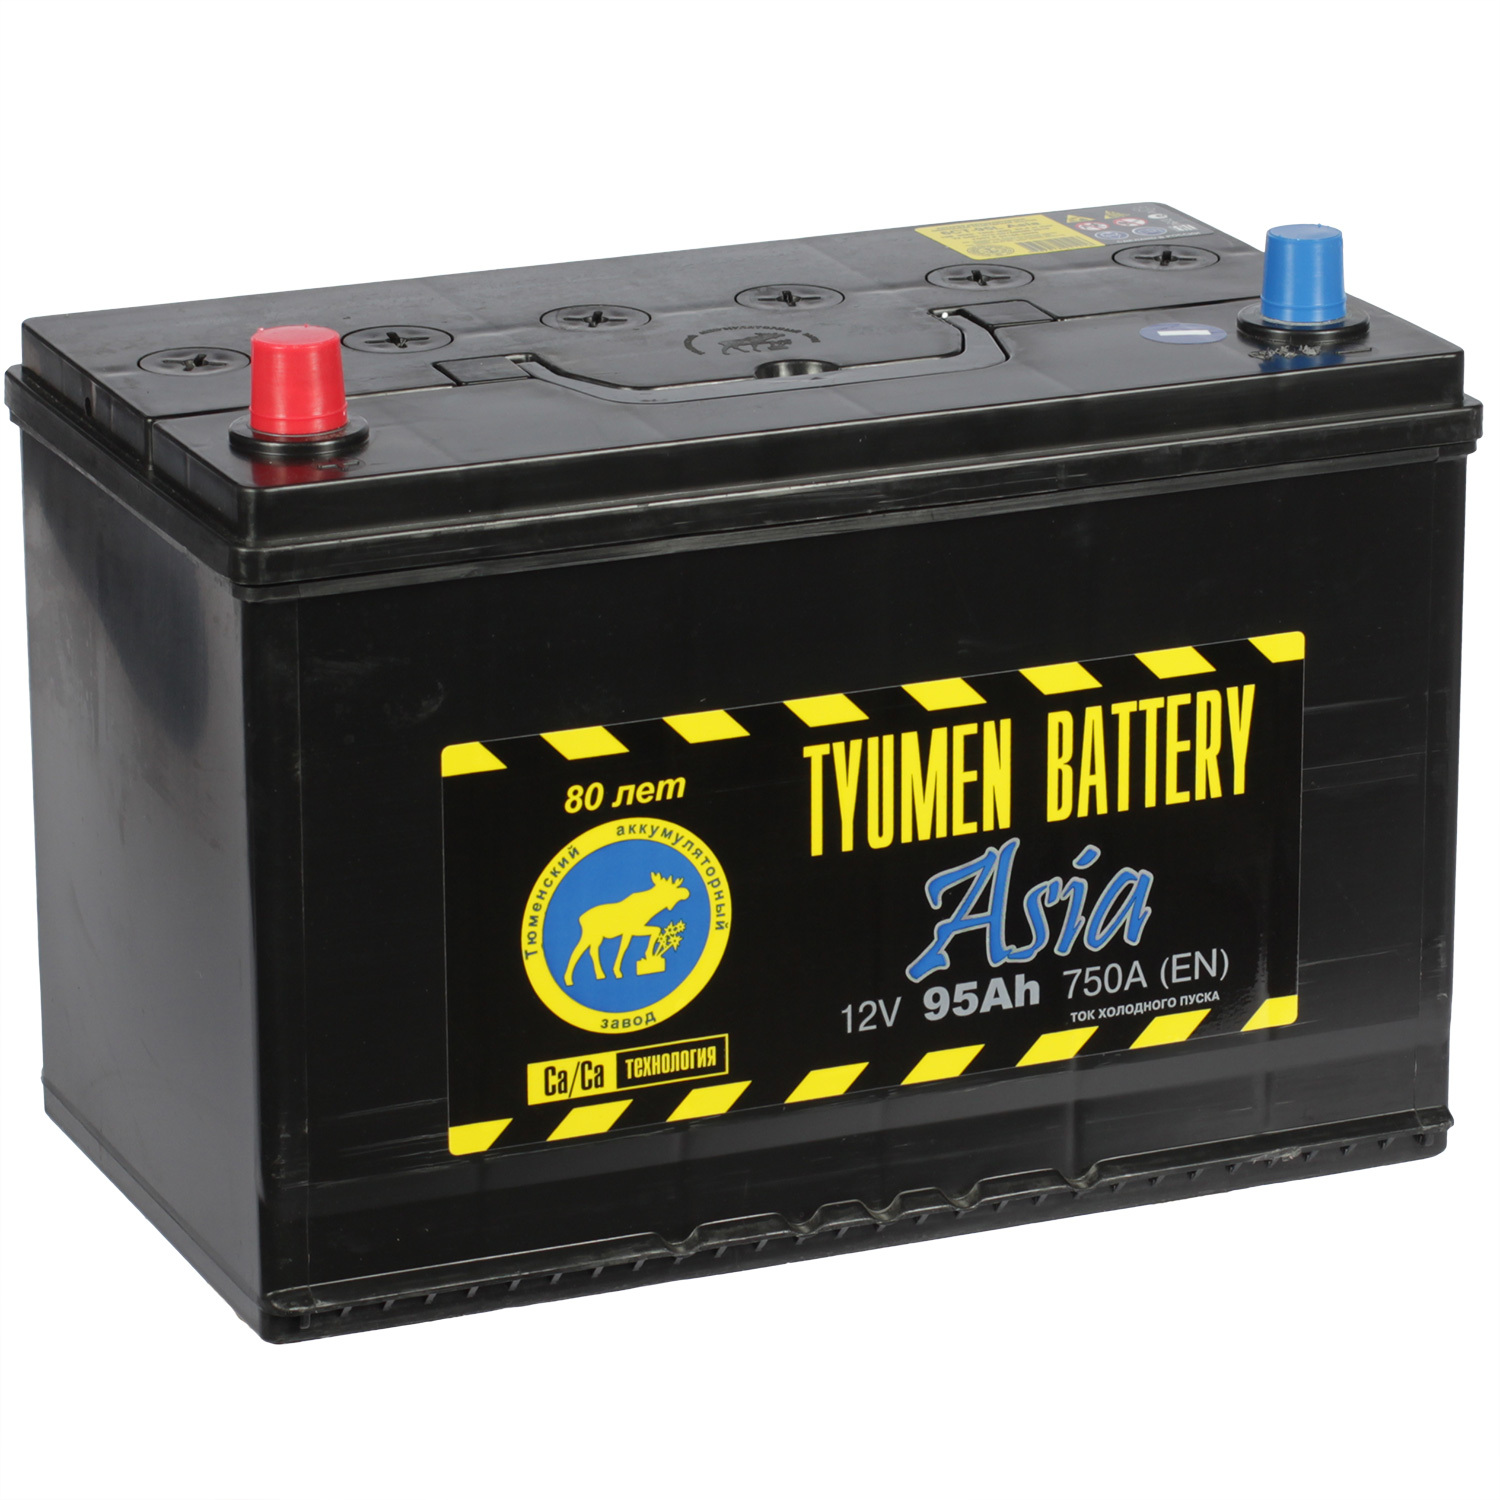 Tyumen Battery Автомобильный аккумулятор Tyumen Battery 95 Ач прямая полярность D31R tyumen battery автомобильный аккумулятор tyumen battery standard 60 ач прямая полярность l2